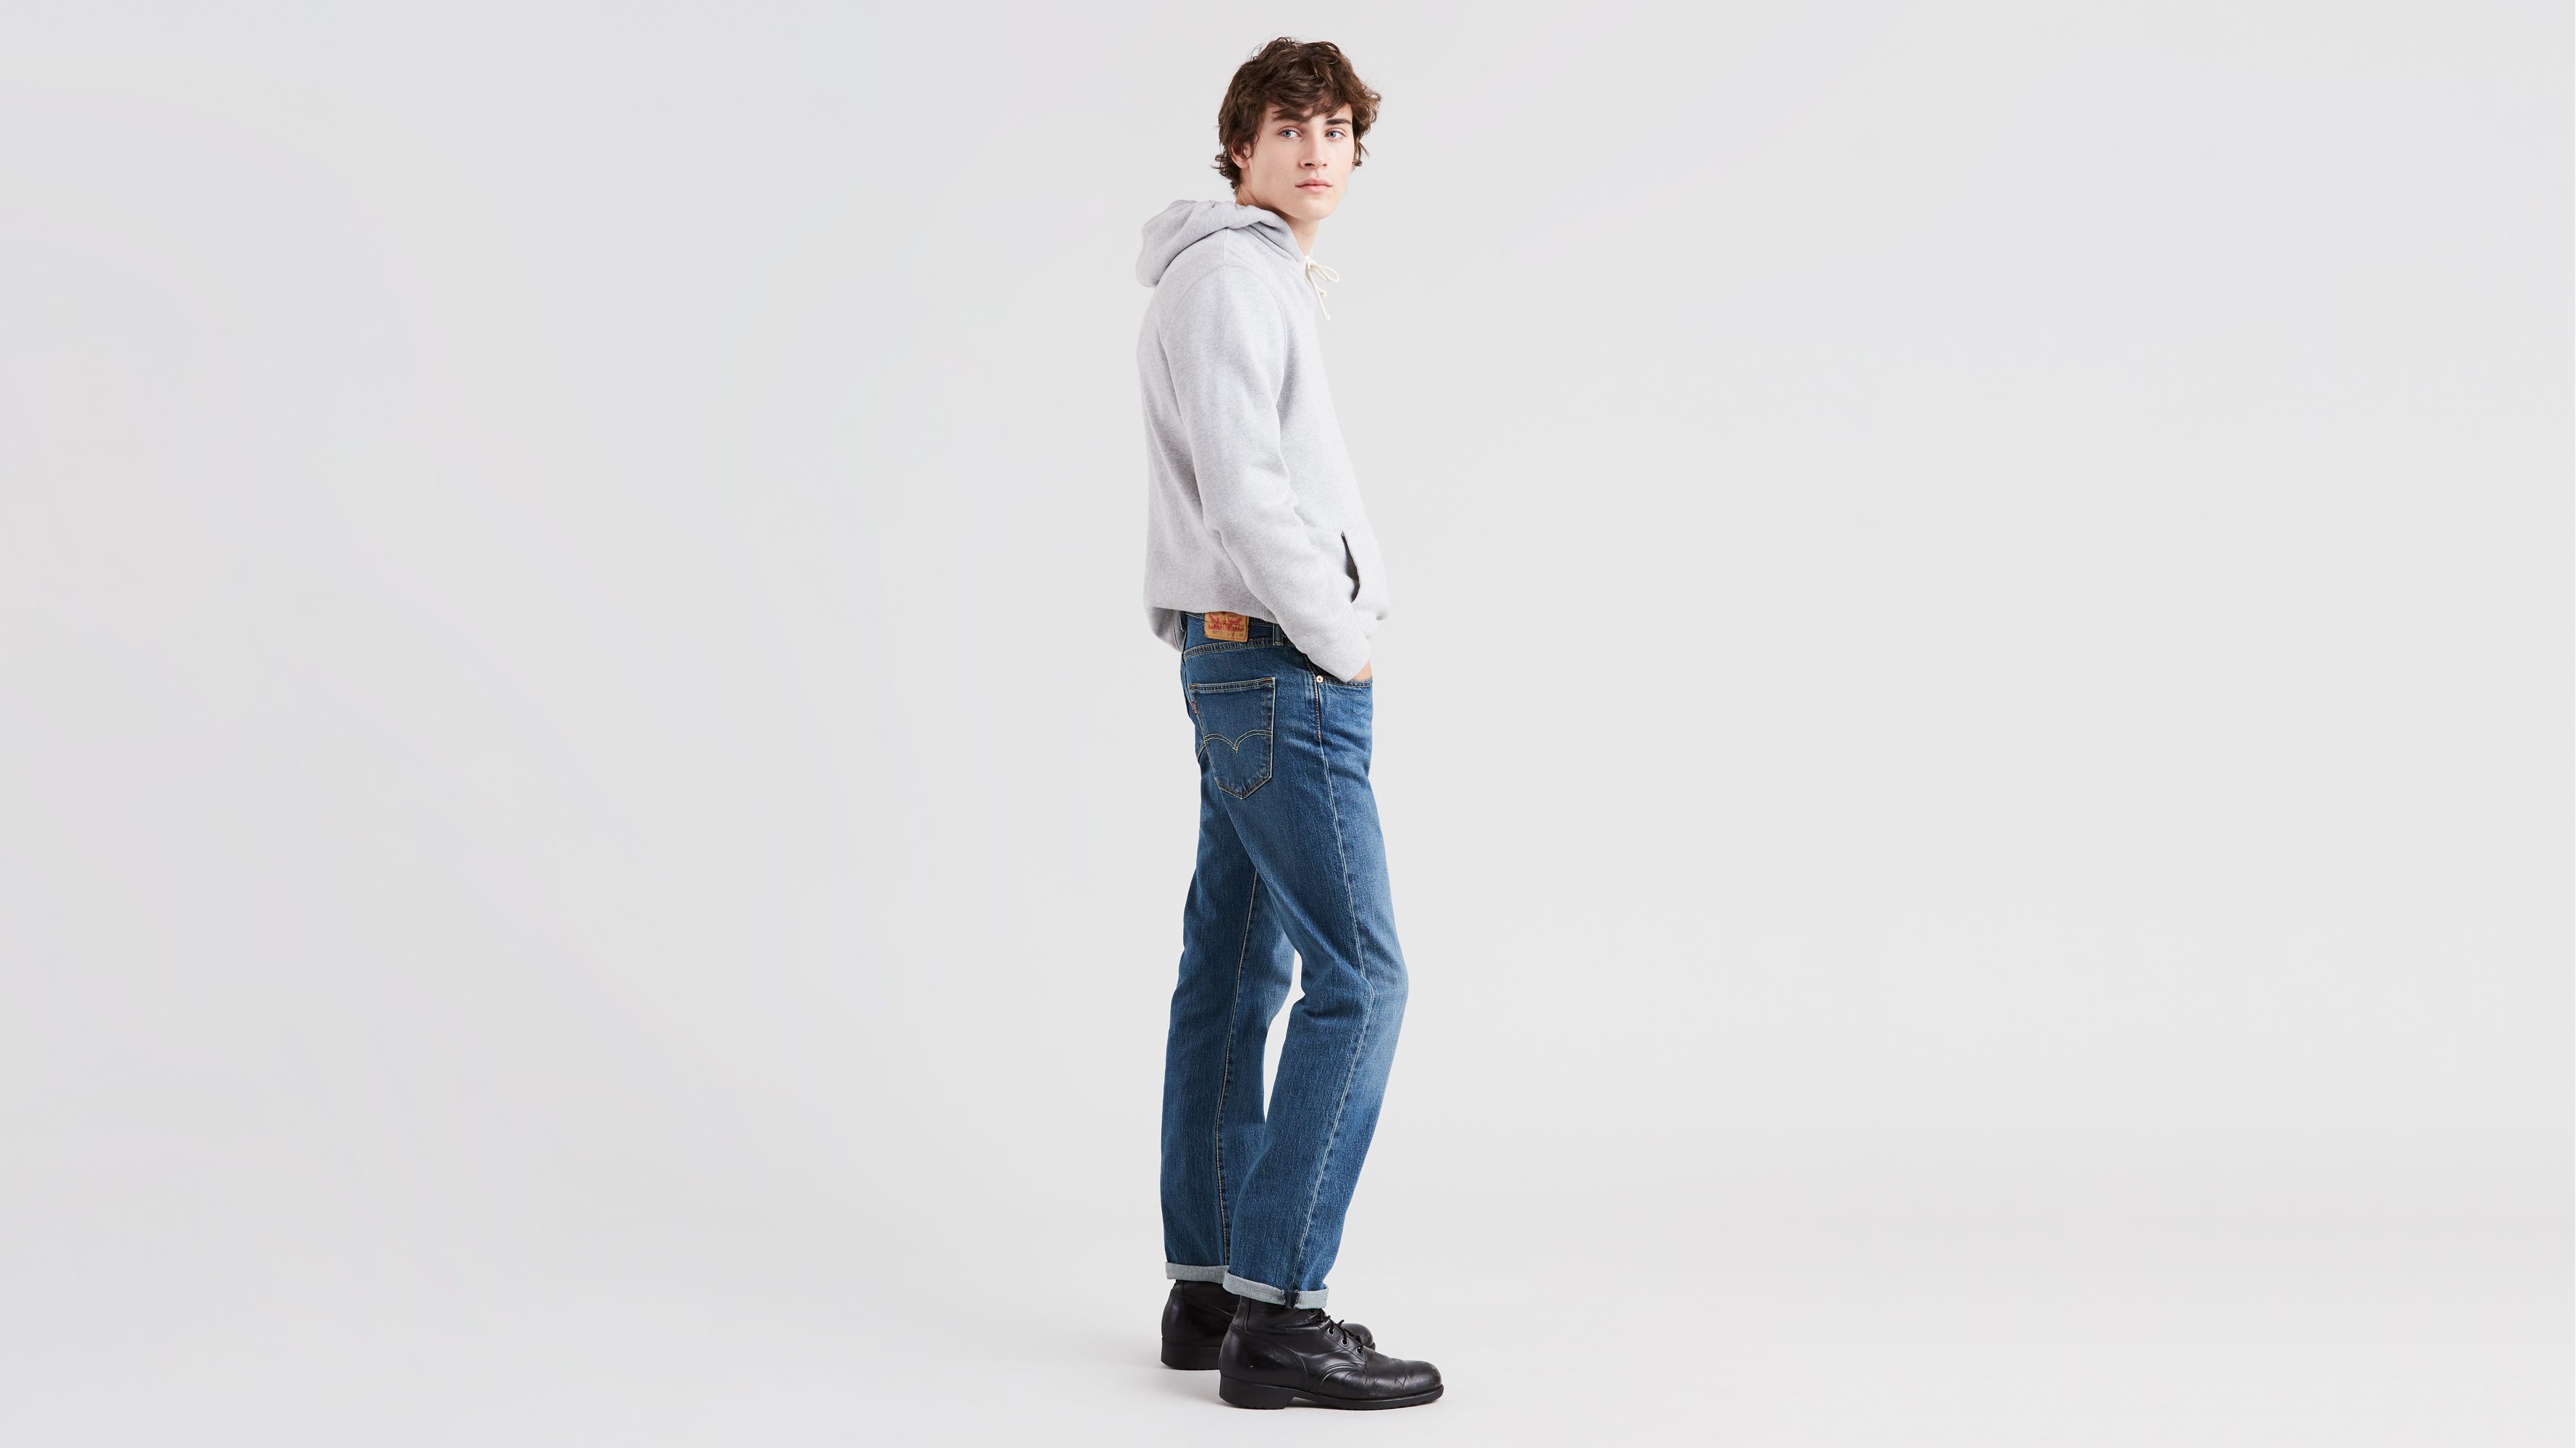 501® Original Fit Stretch Men's Jeans - Medium Wash